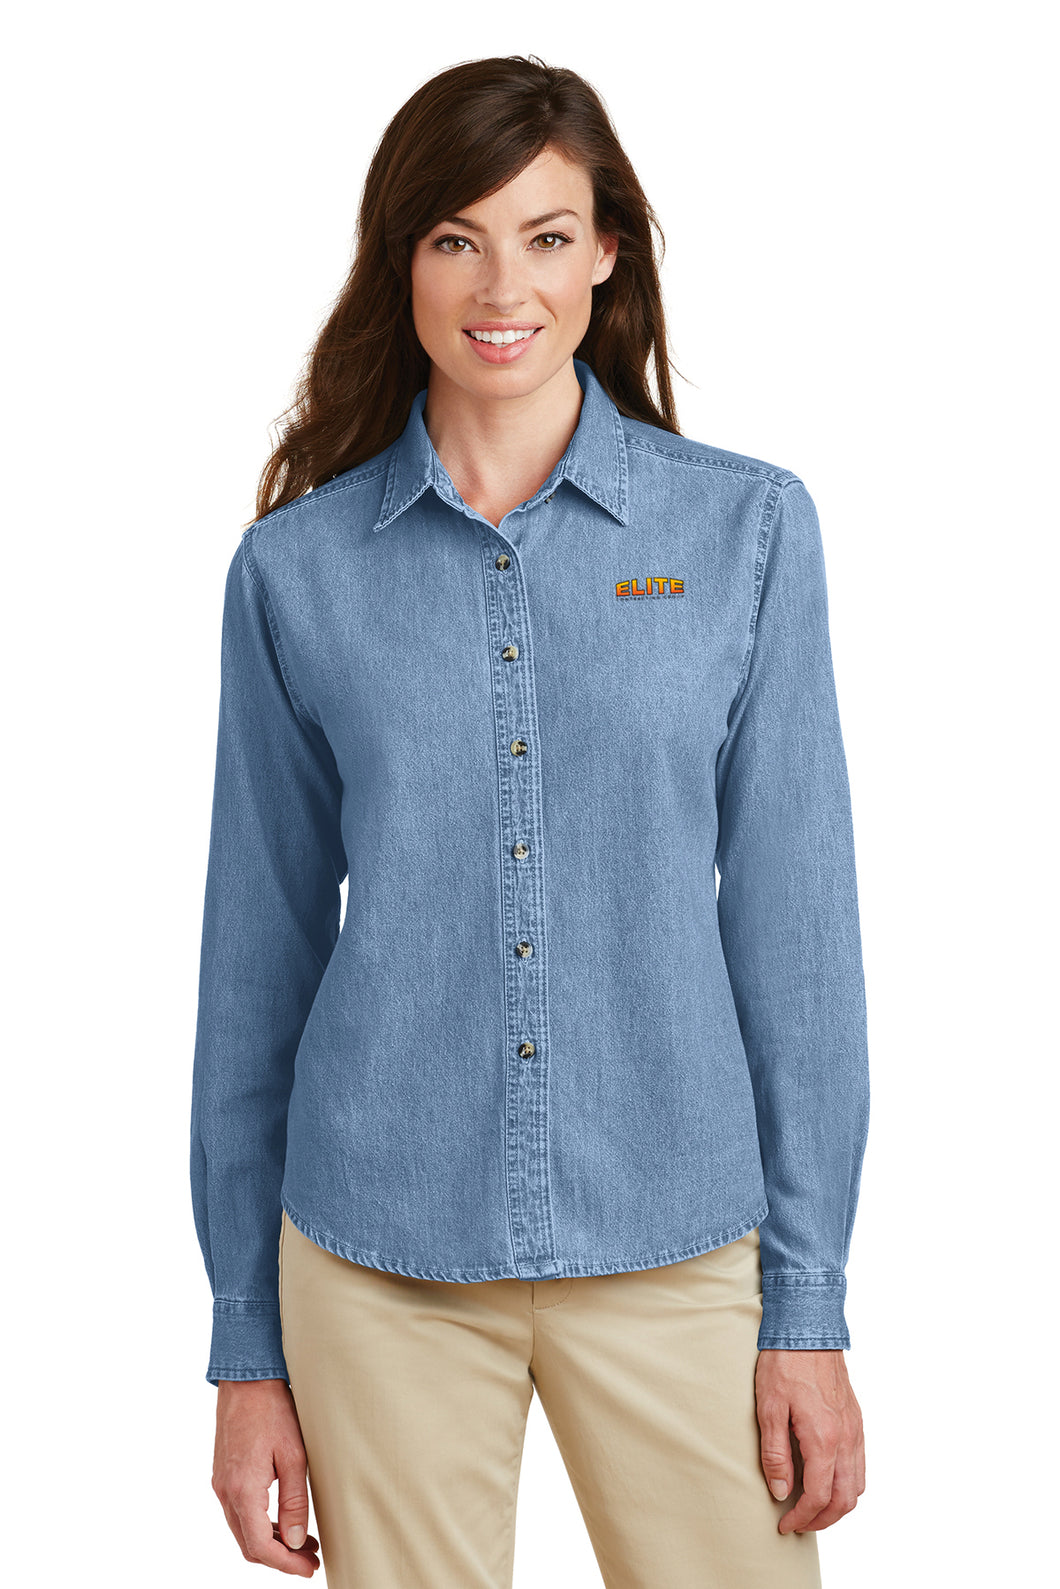 Jonsson Workwear | Women's Long Sleeve Denim Work Shirts